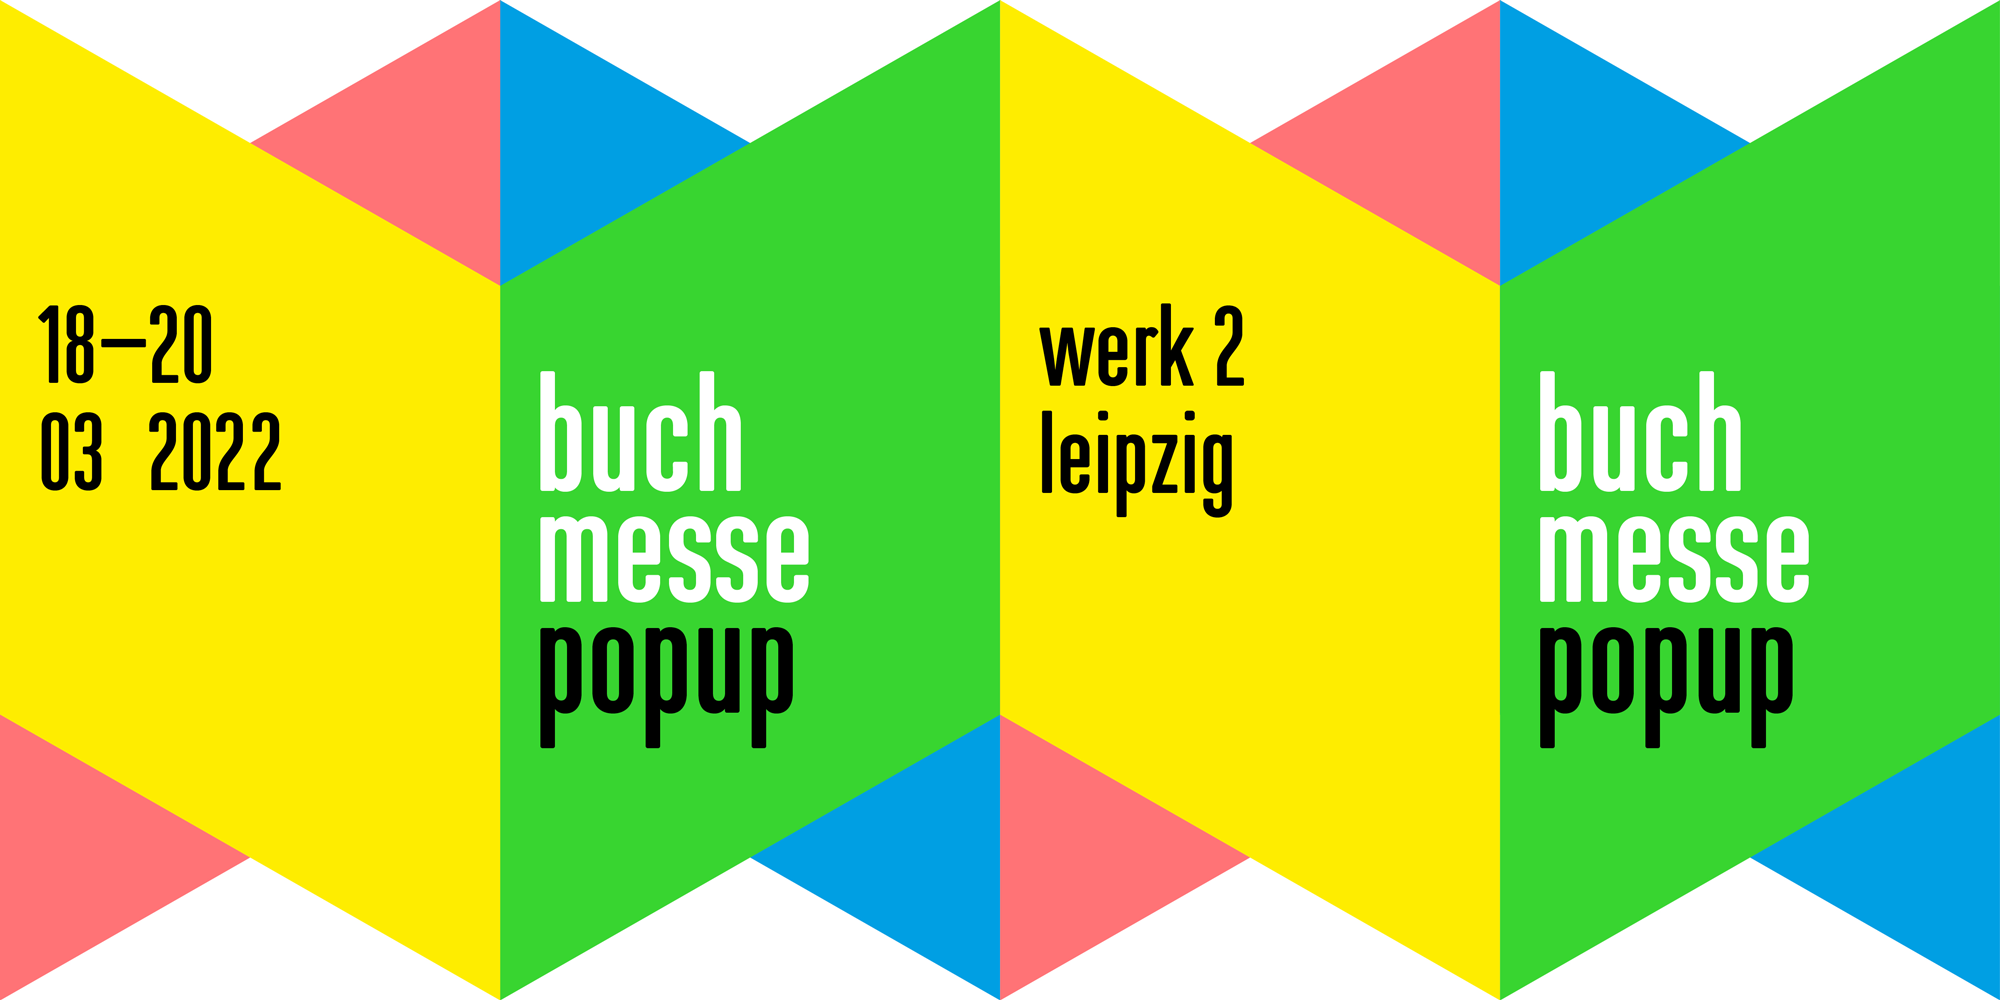 buchmesse_popup_2022